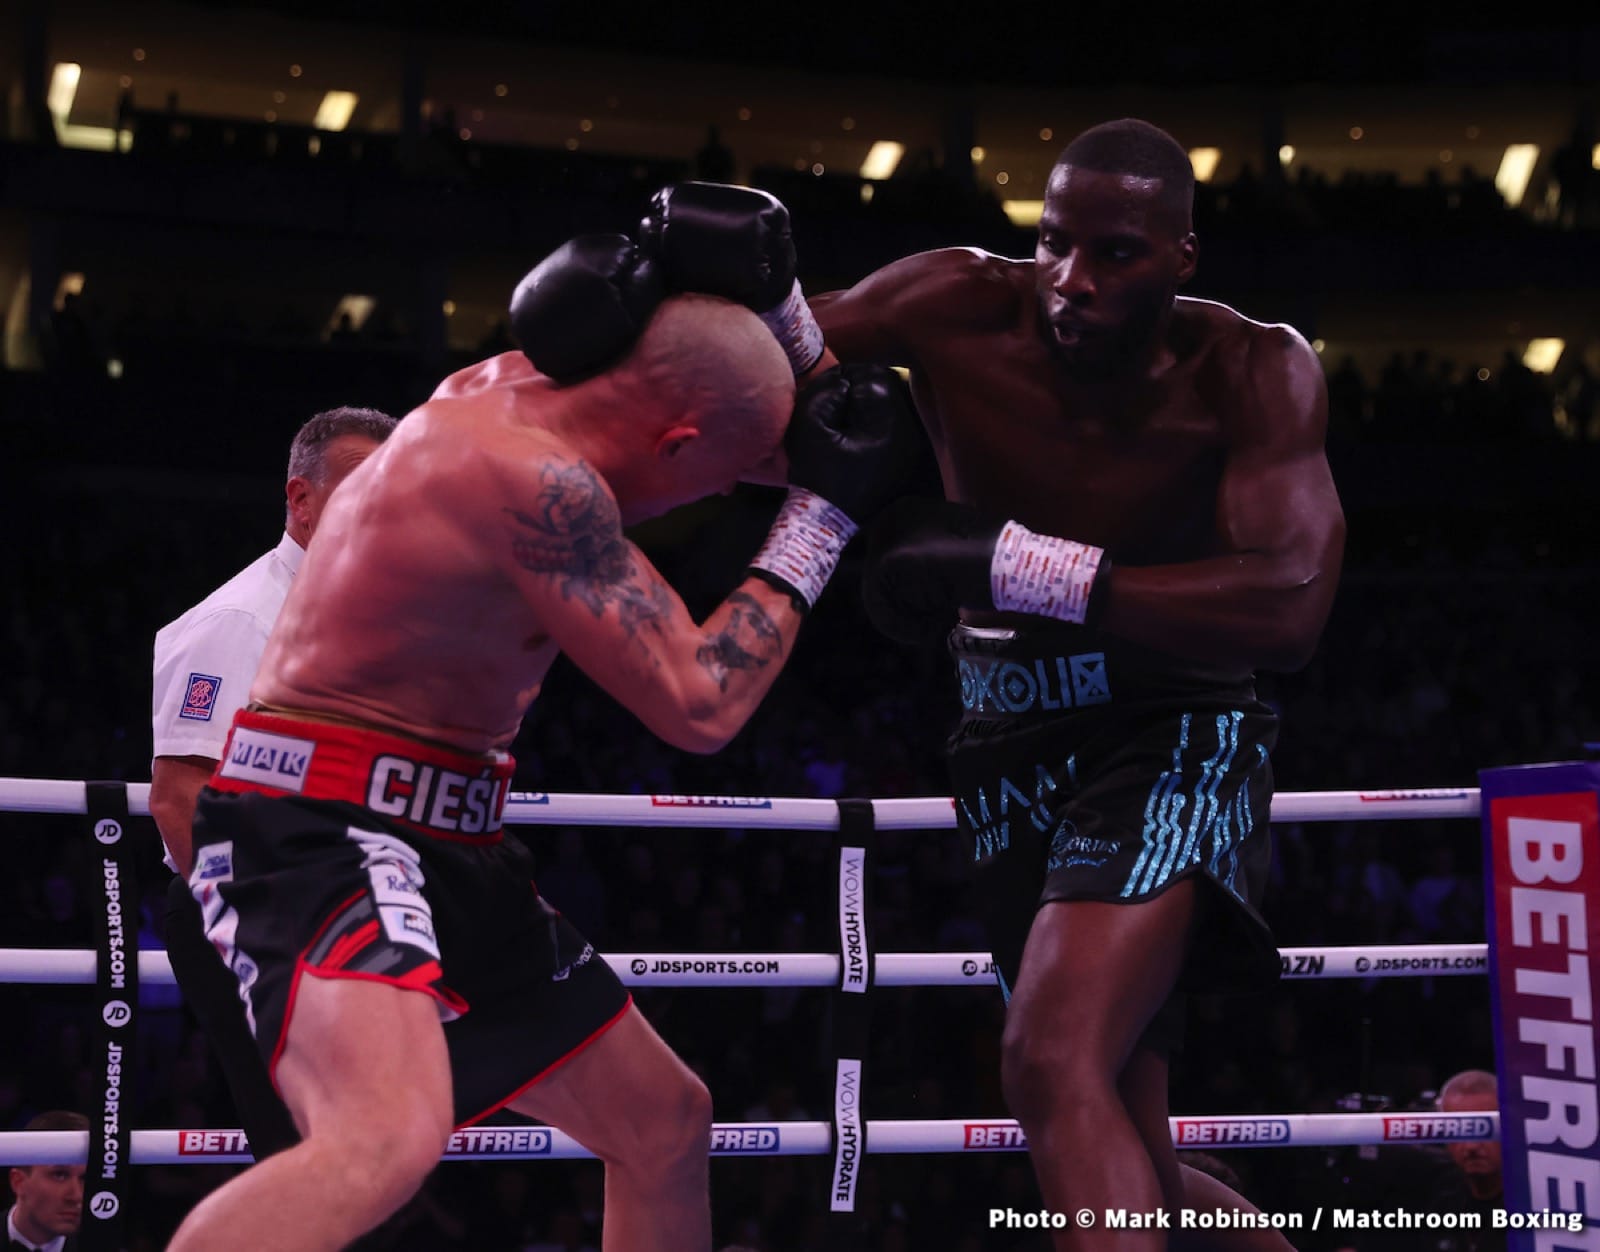 Lawrence Okolie, Michal Cieslak: boxing image / photo